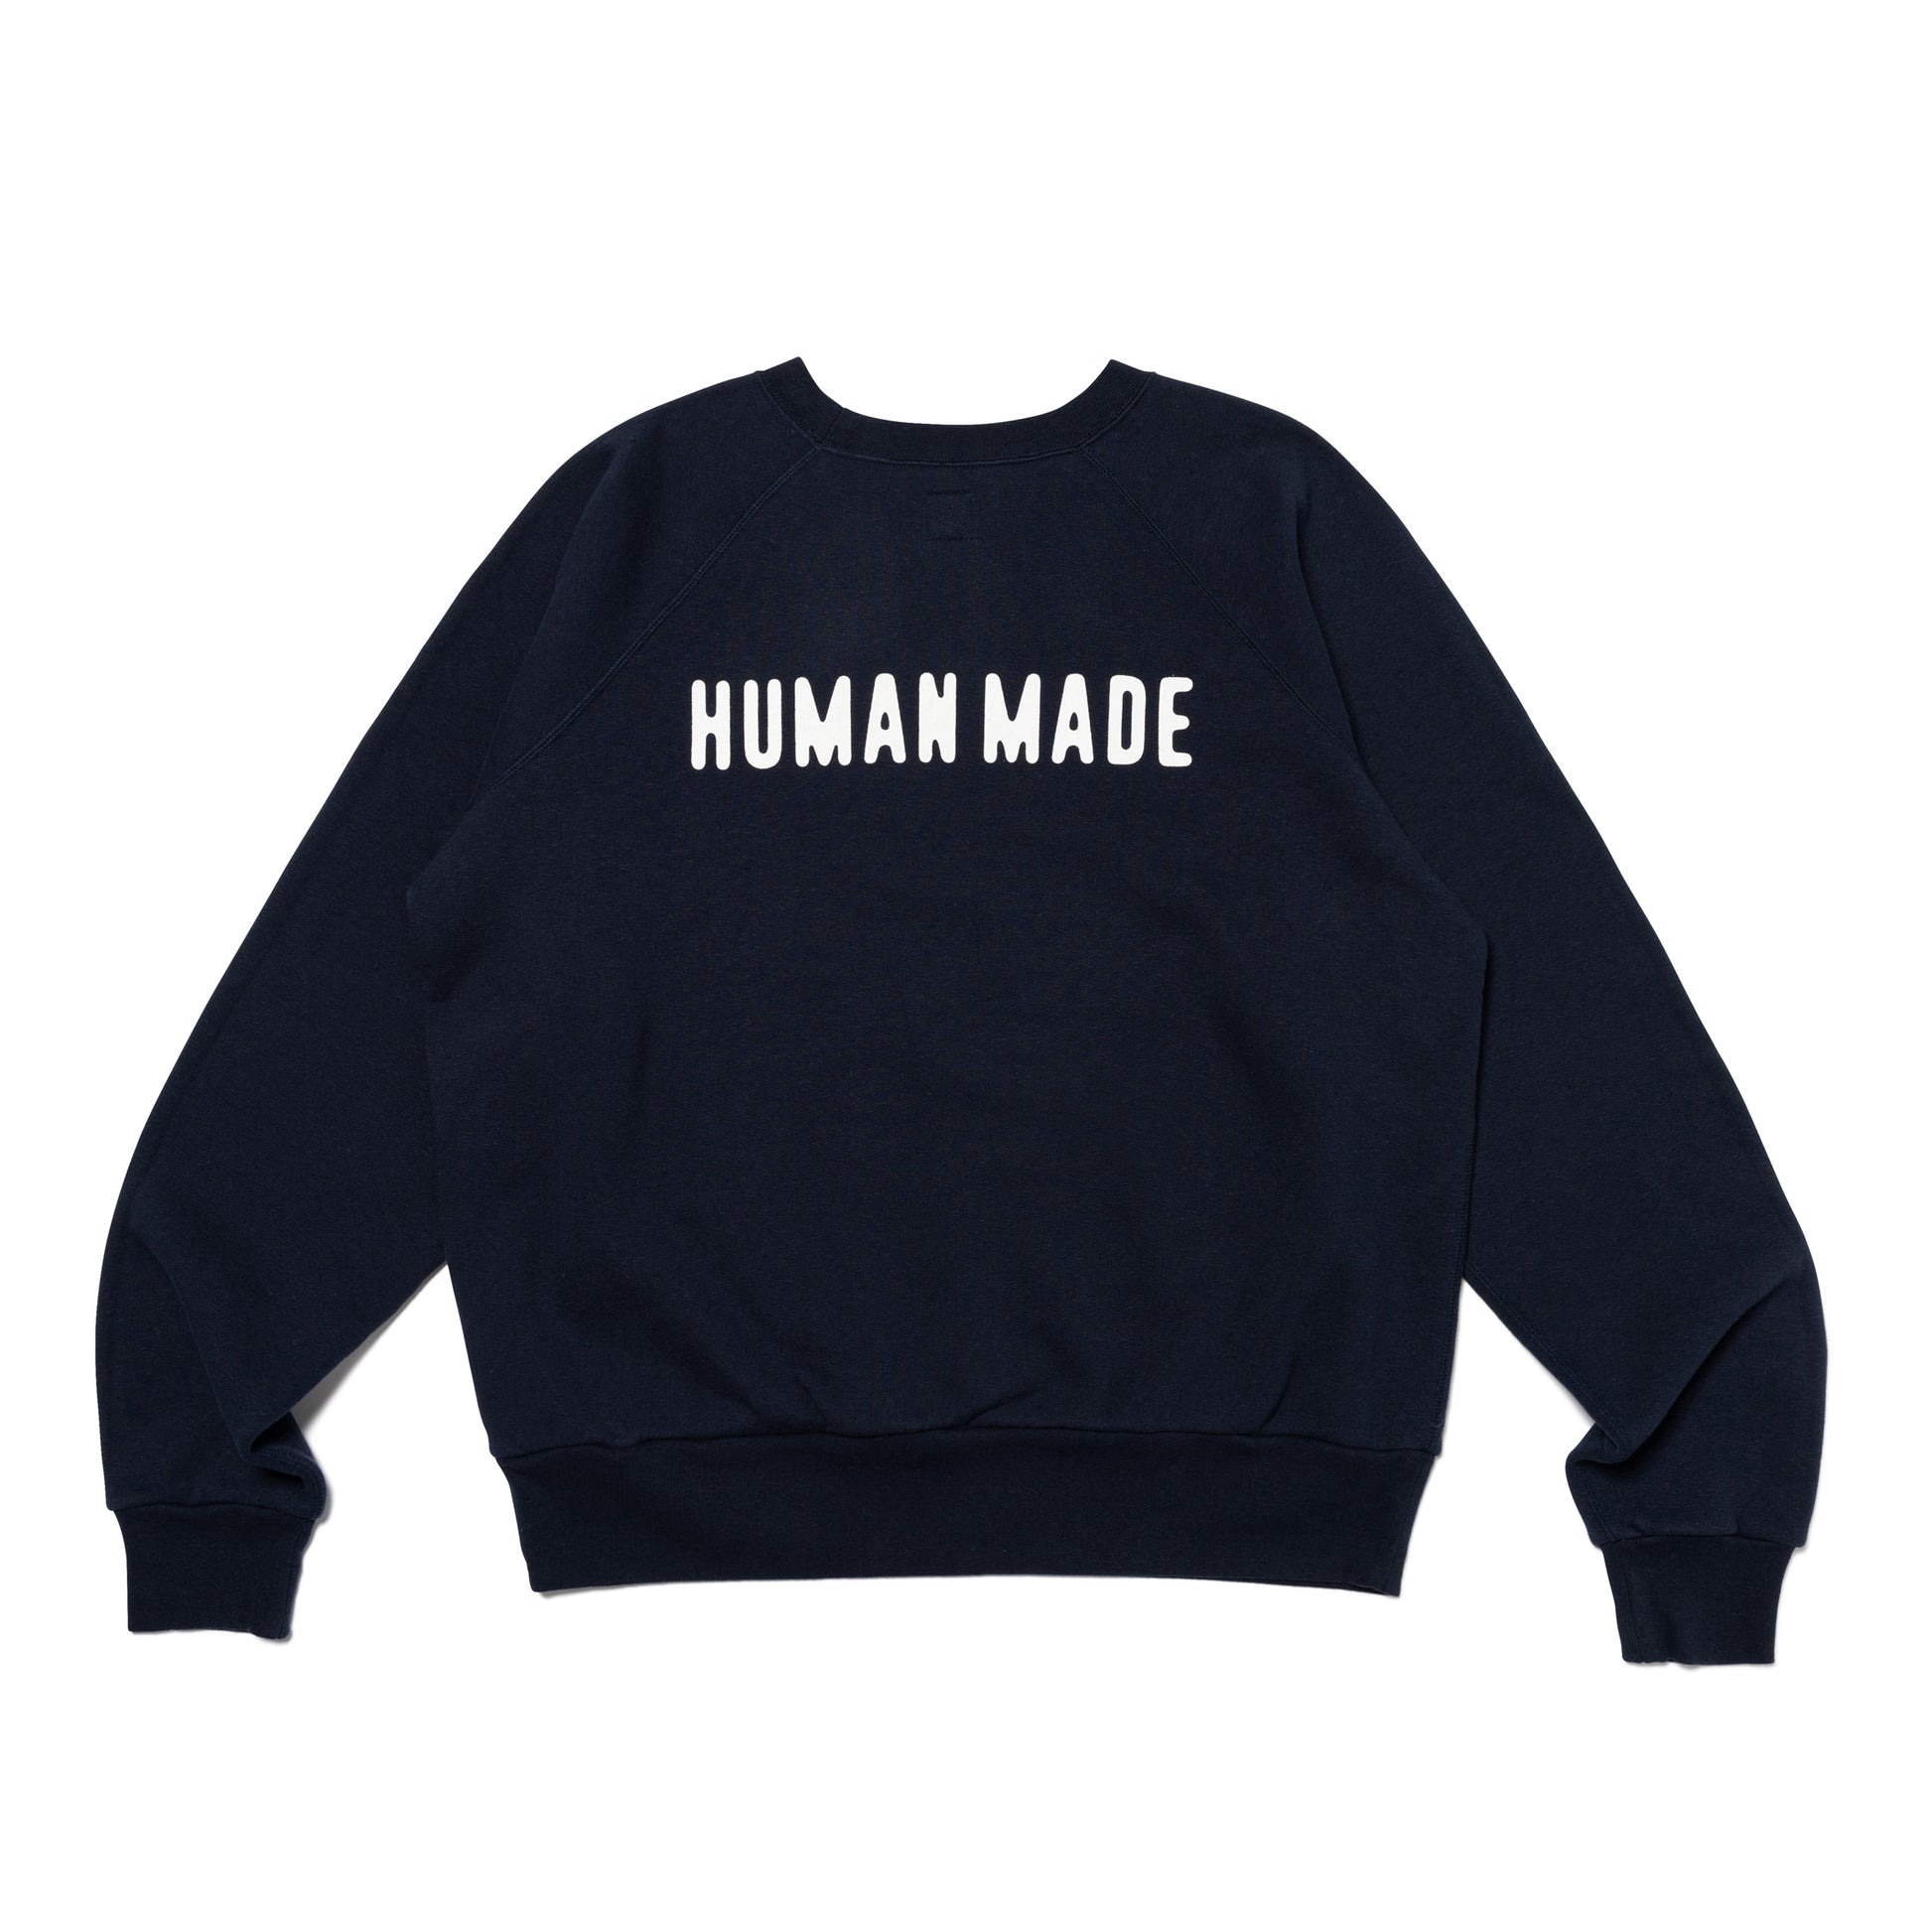 Human Made Sweatshirt (M)Mサイズ